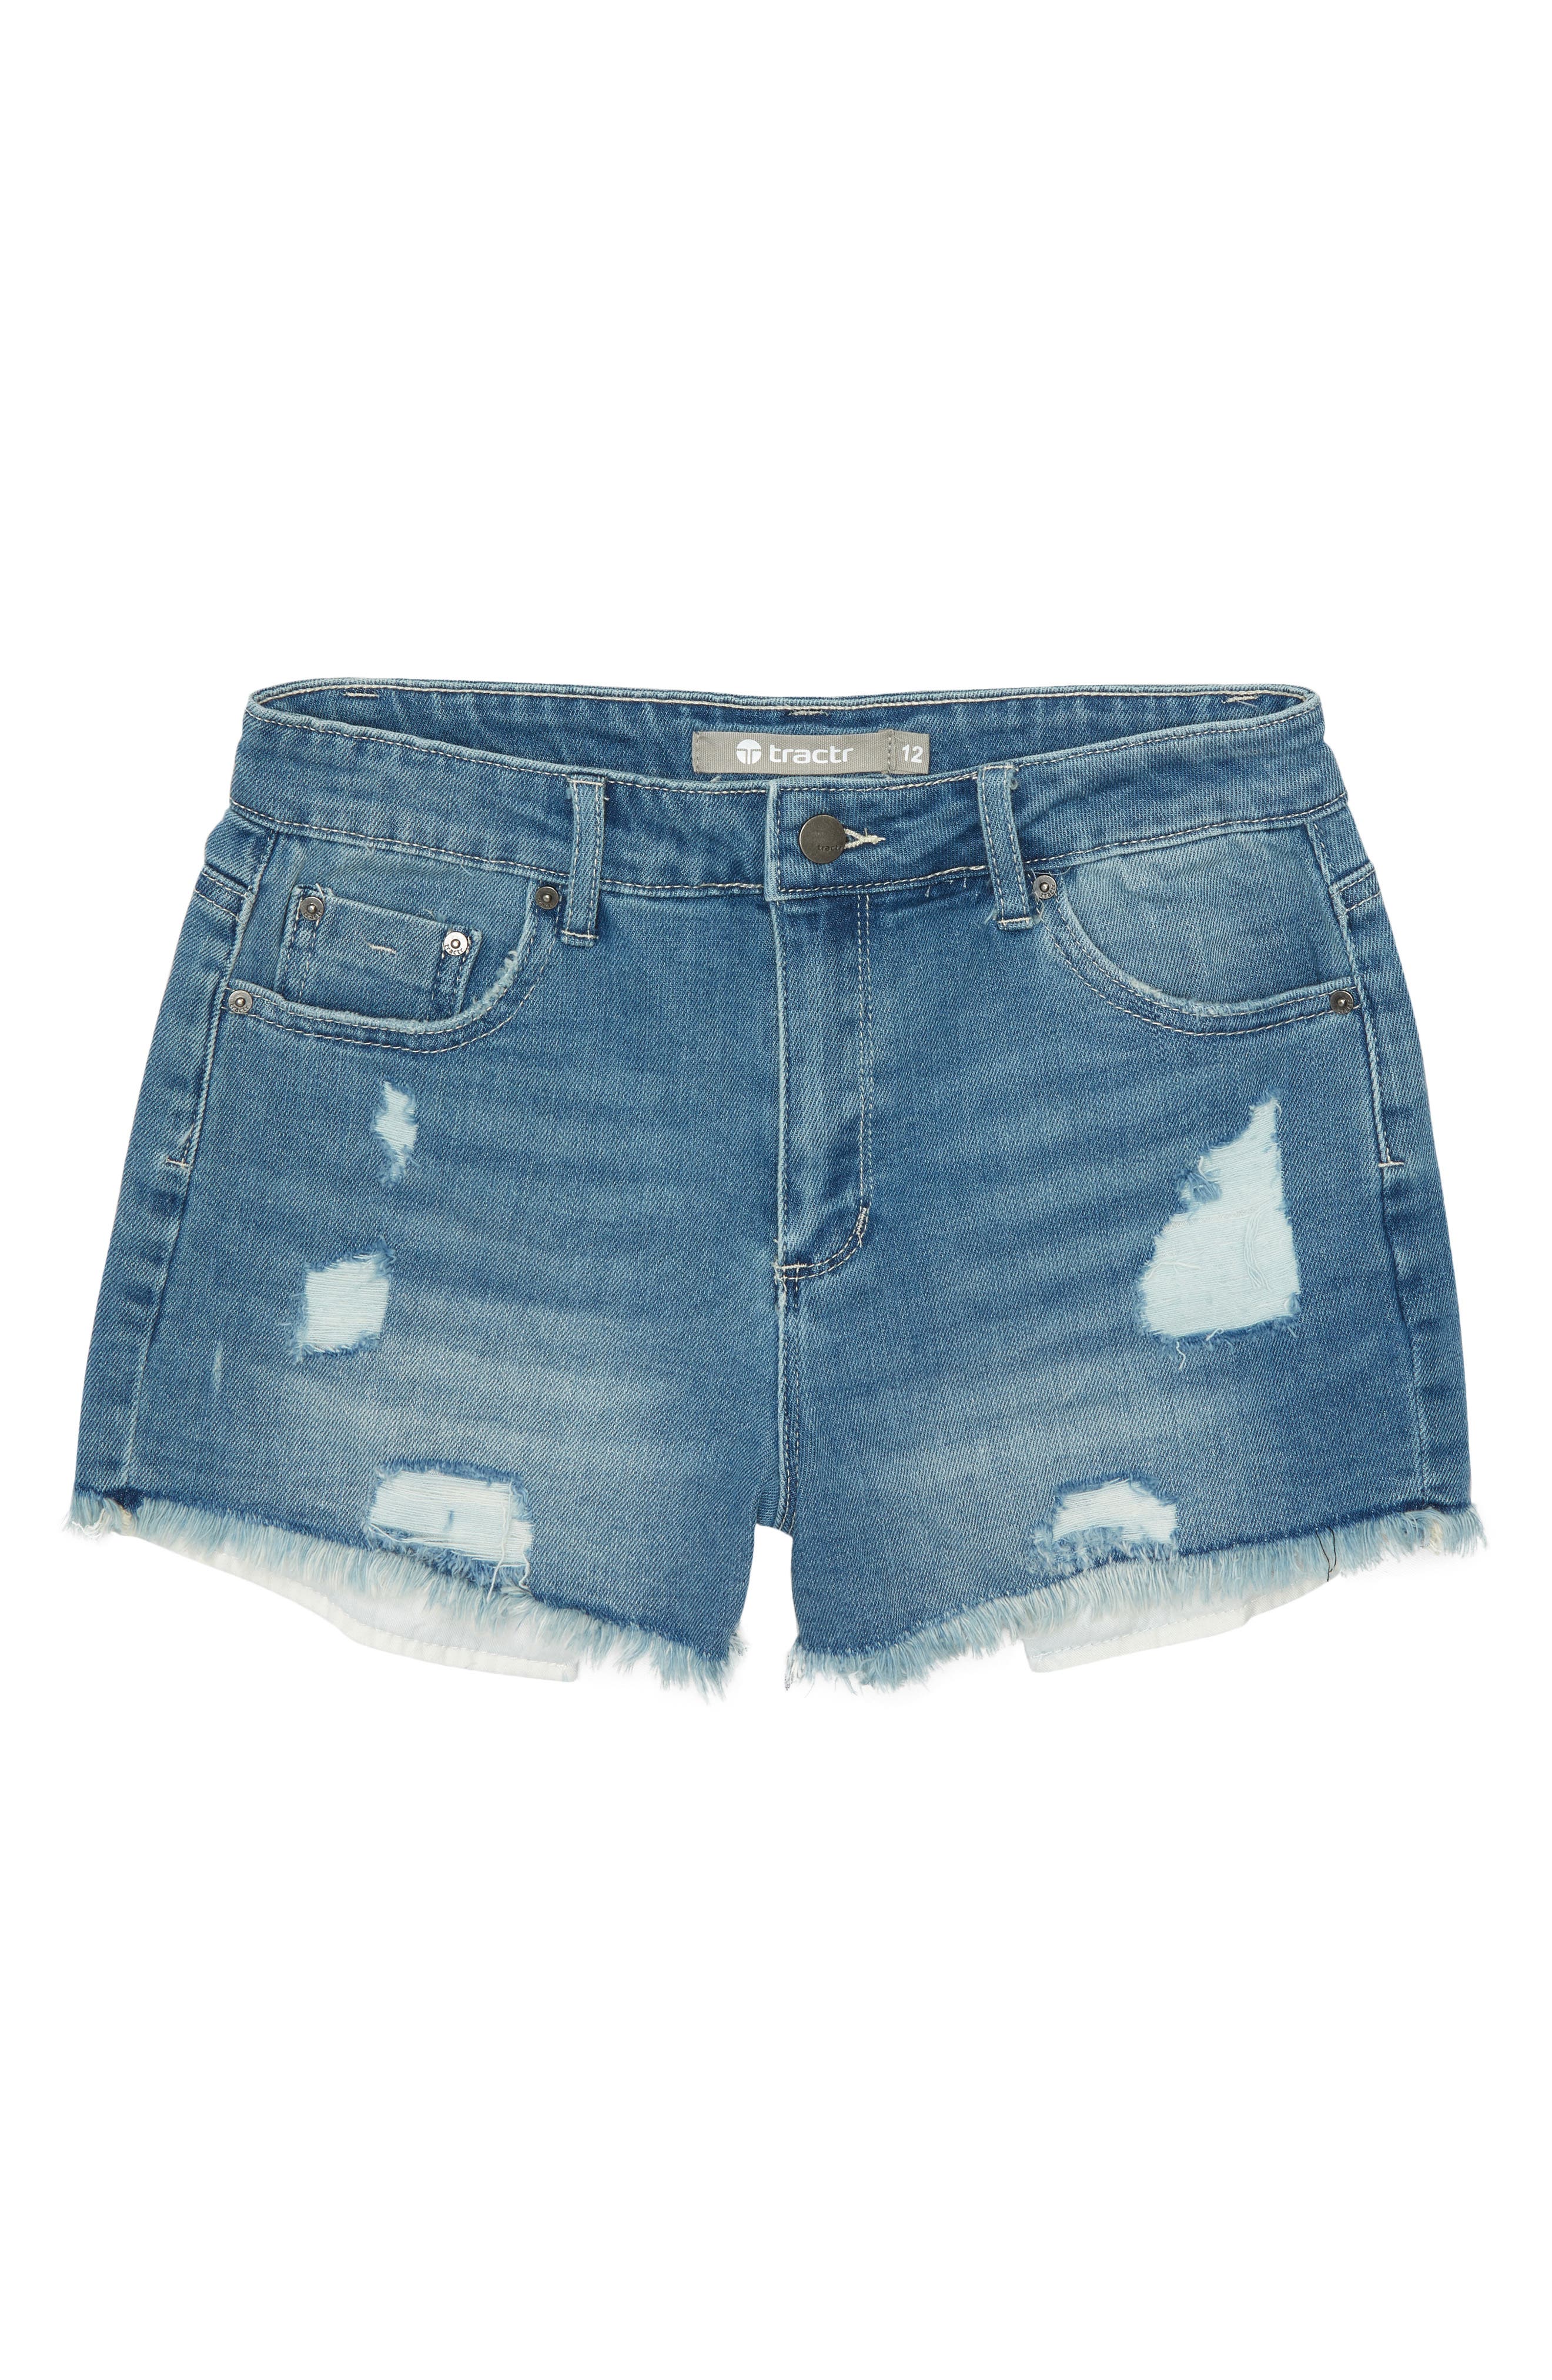 TEEN distressed denim shorts